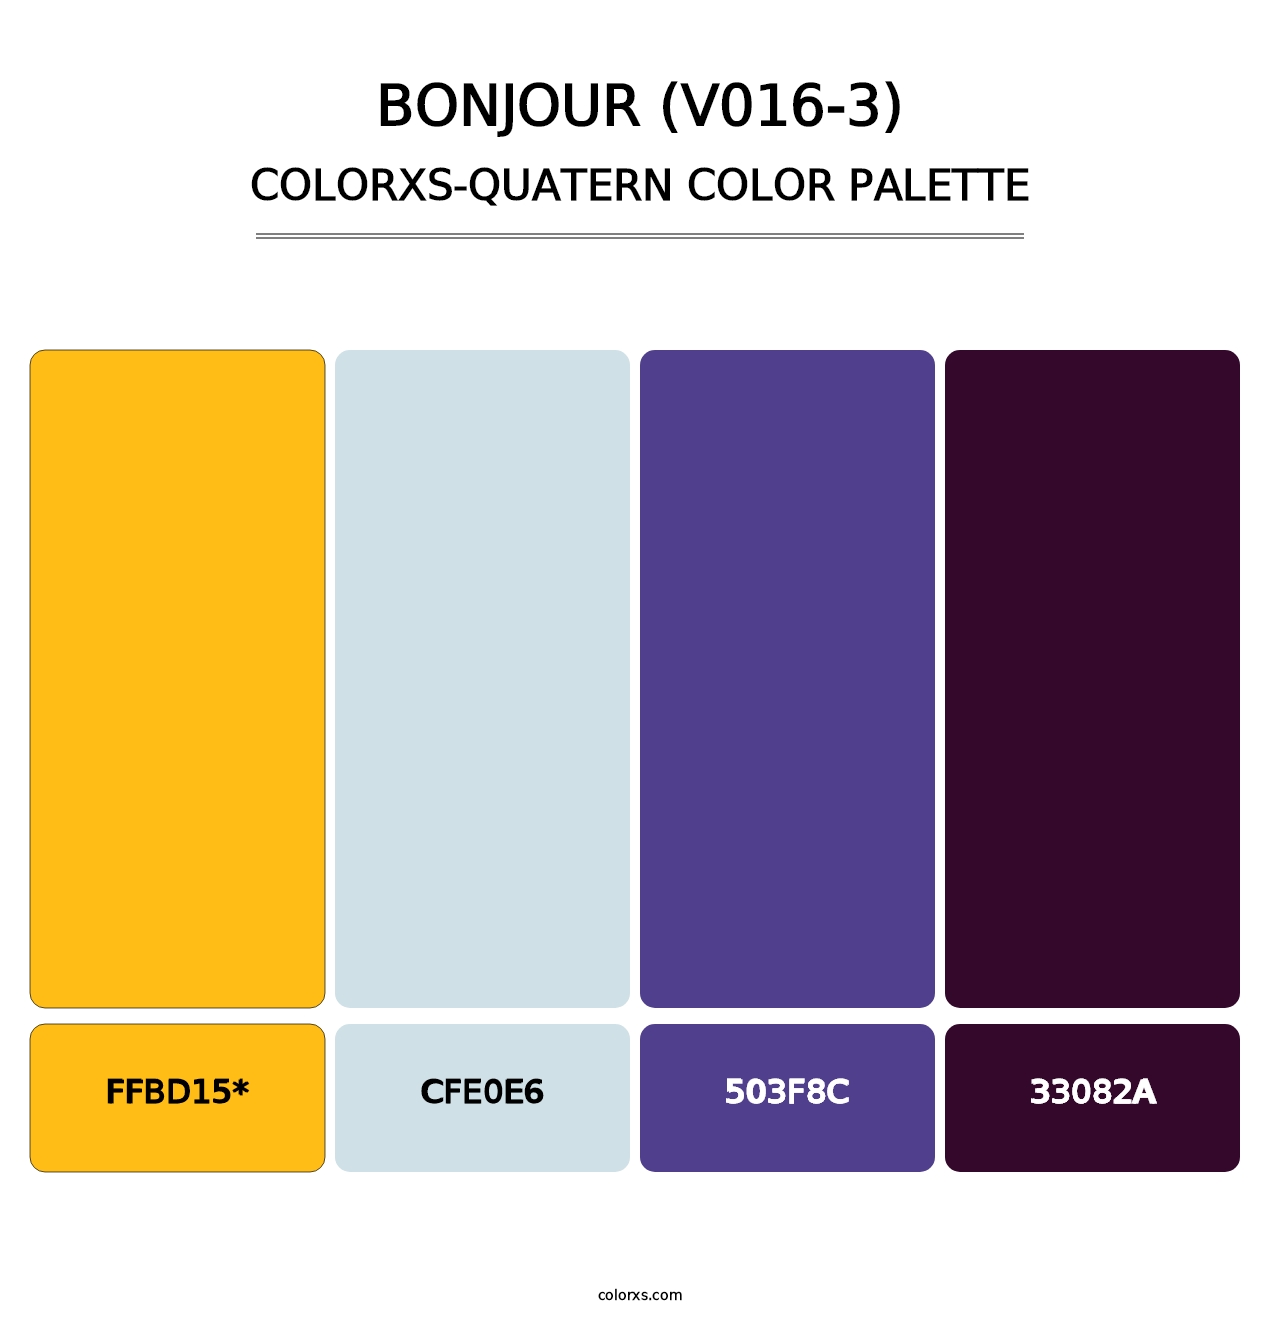 Bonjour (V016-3) - Colorxs Quatern Palette